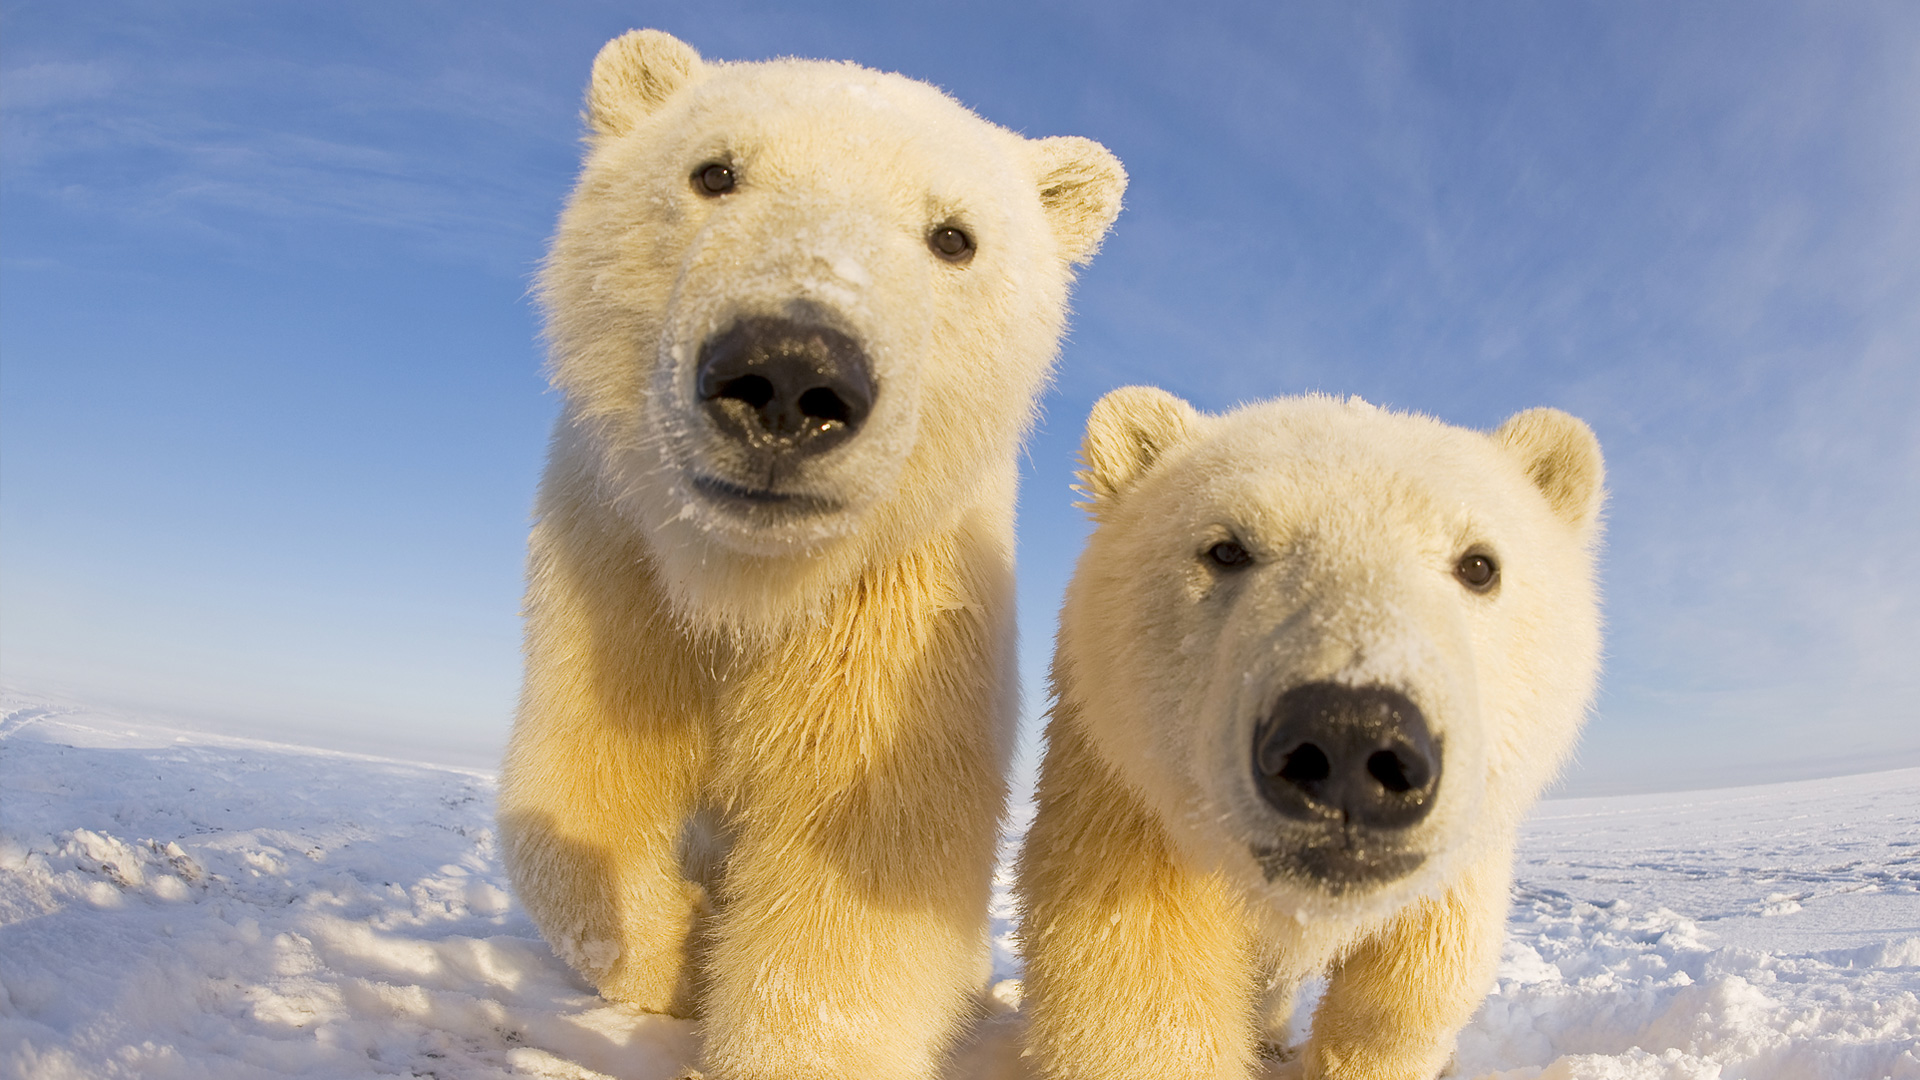 Polar bear survey shows good news, but worrying trends | WWF